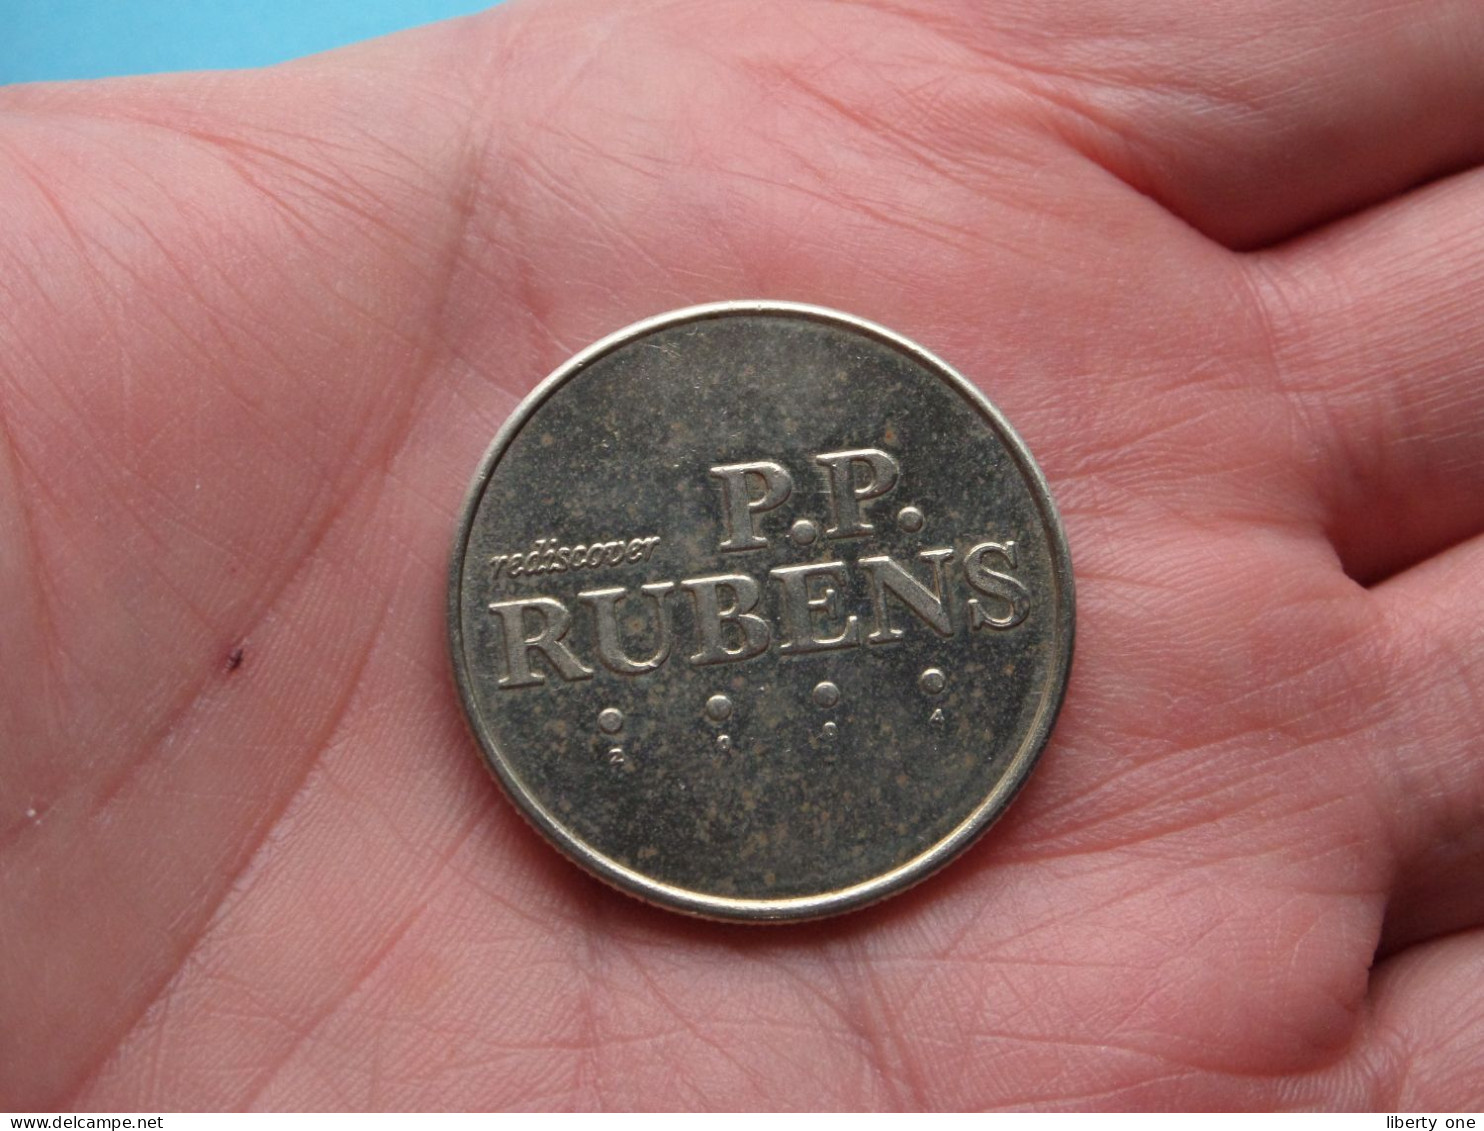 Rediscover (2004) P.P. RUBENS 1577-1640 ( Zie / Voir / See > DETAIL > SCANS ) ! - Souvenir-Medaille (elongated Coins)